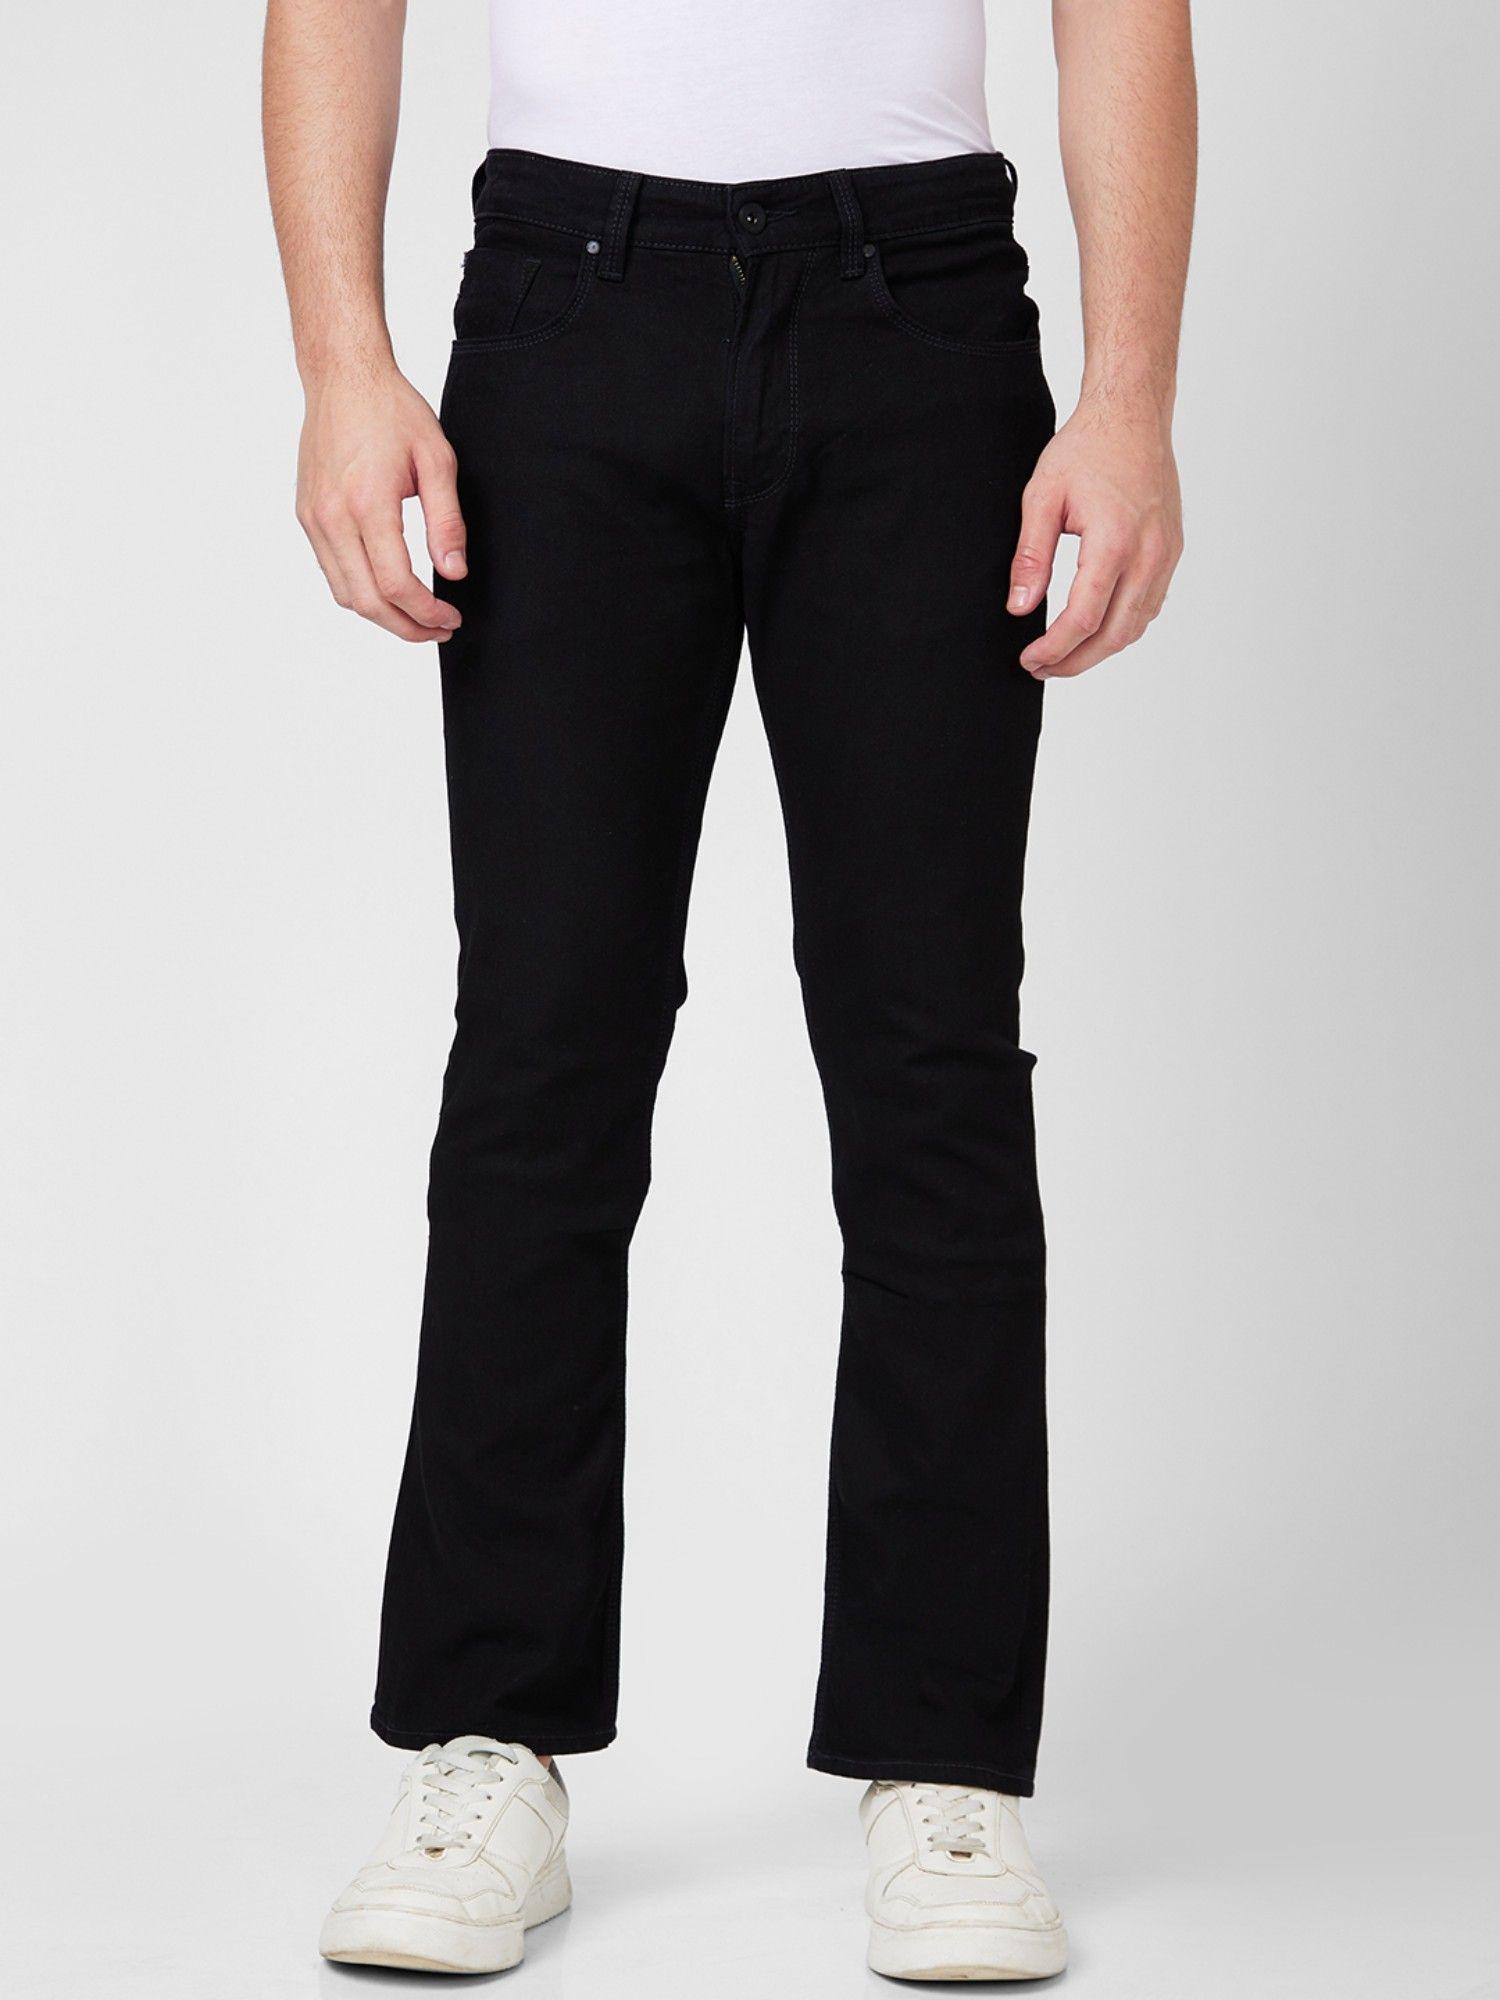 mid-rise-comfort-fit-regular-length-black-jeans